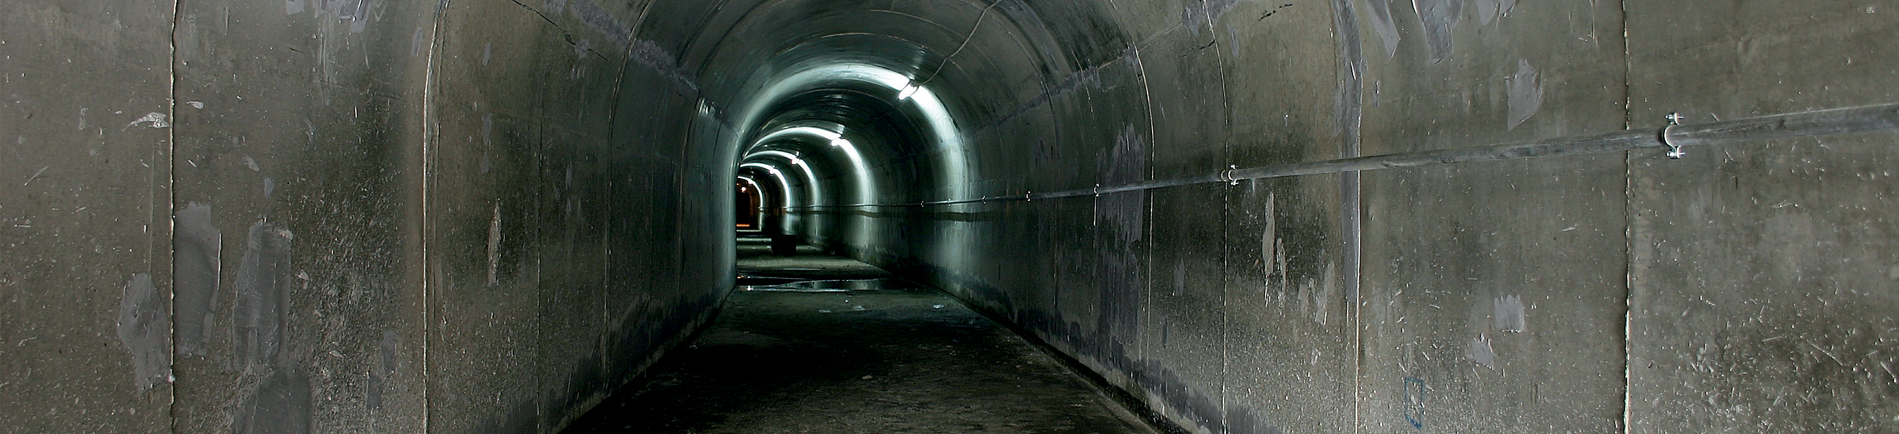 Rehabilitation of Roads & Services in Haret Hreik Tunnel